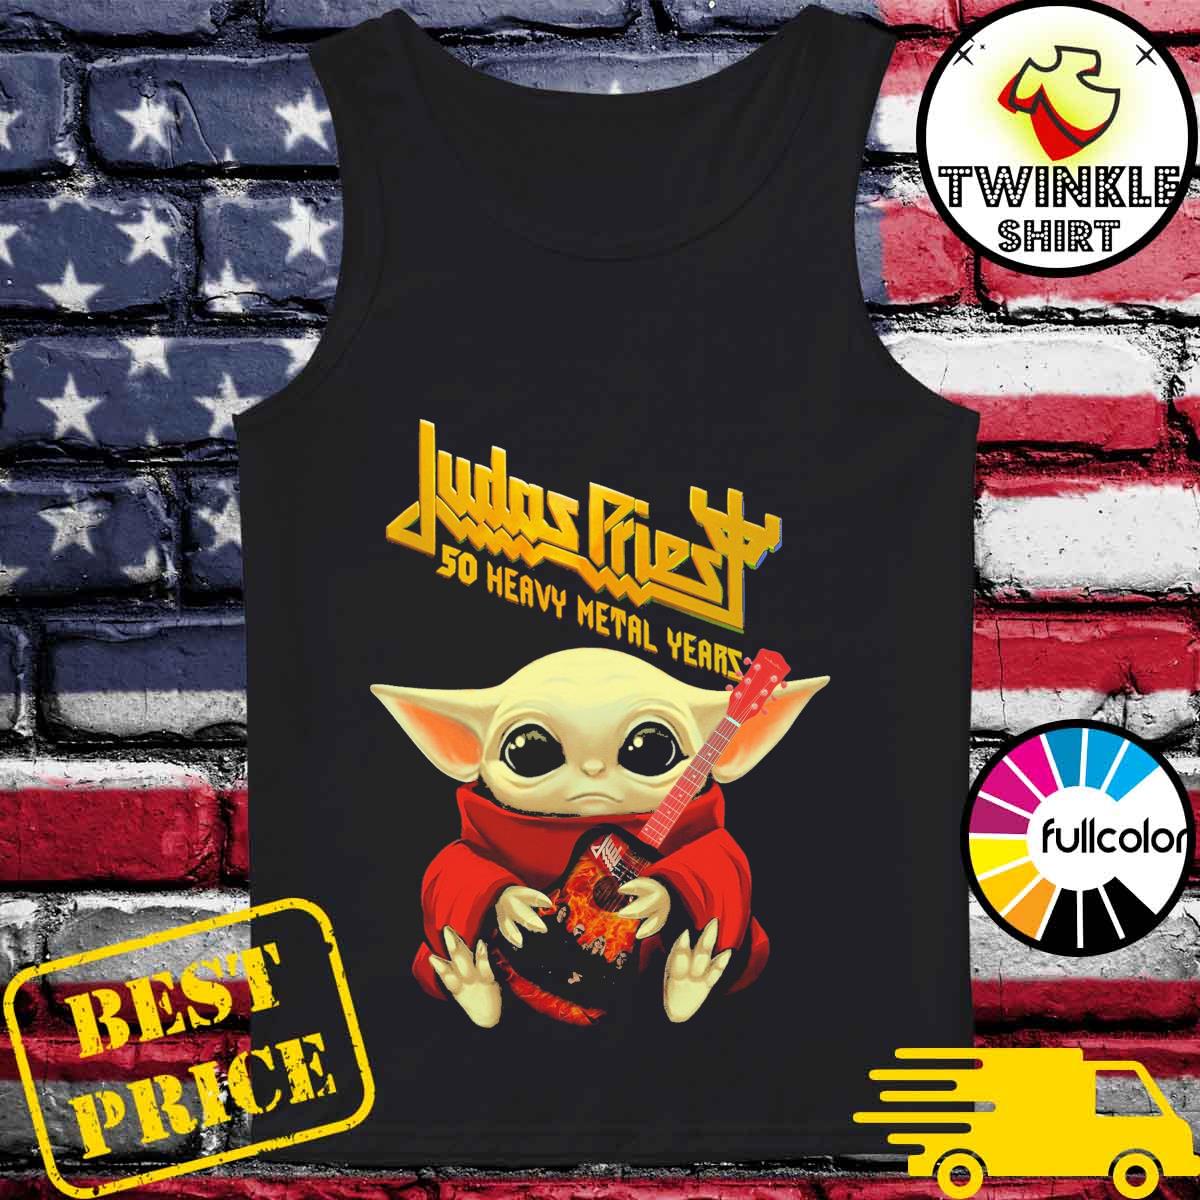 Judas Priest Baby Yoda 50th heavy metal year gift fan movie film shirt S-5XL 